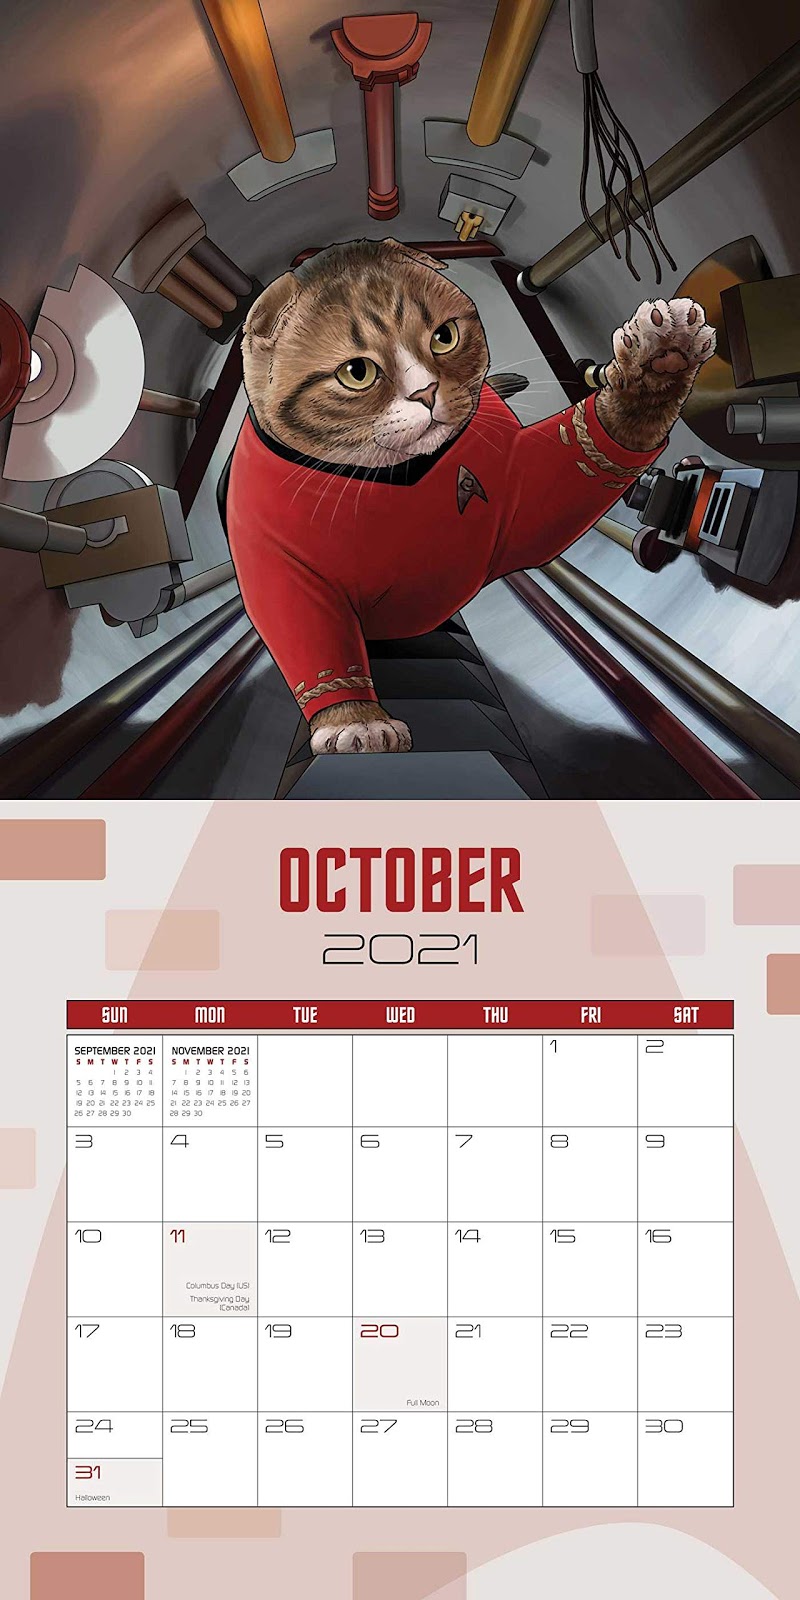 tmp-star-trek-cats-calendar-topic